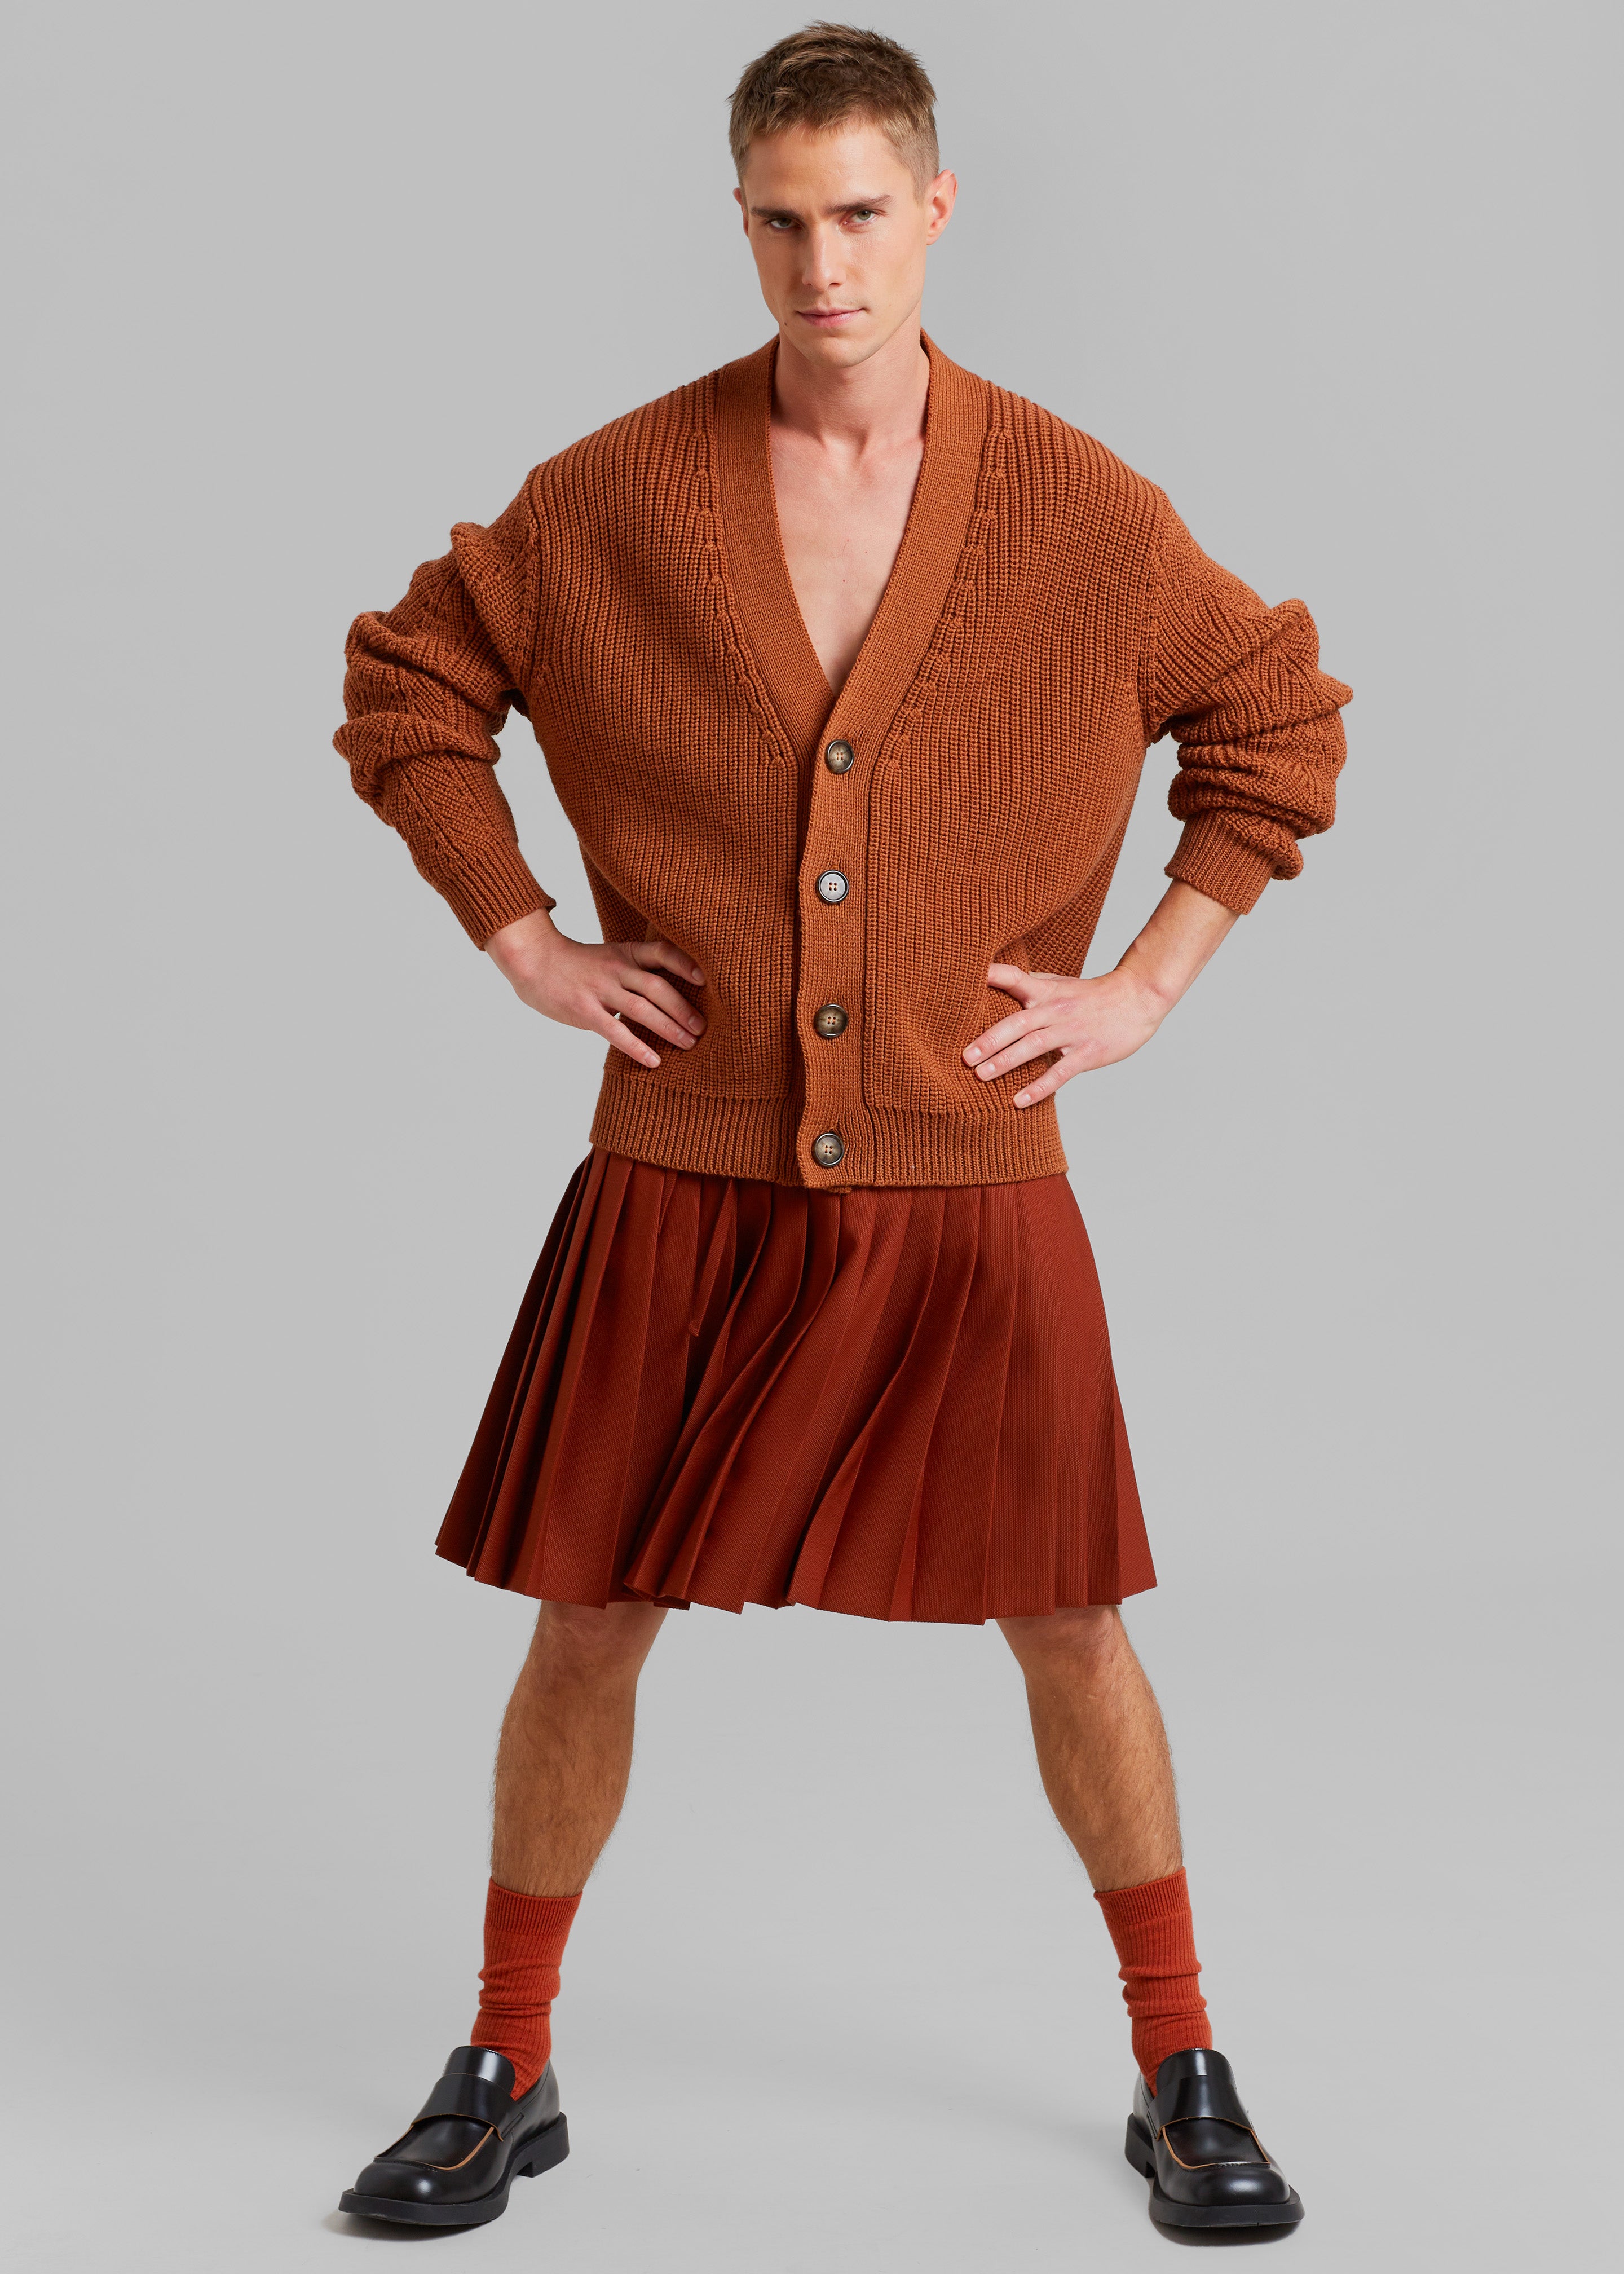 EGONLab Euphoria Skirt - Rust Wool